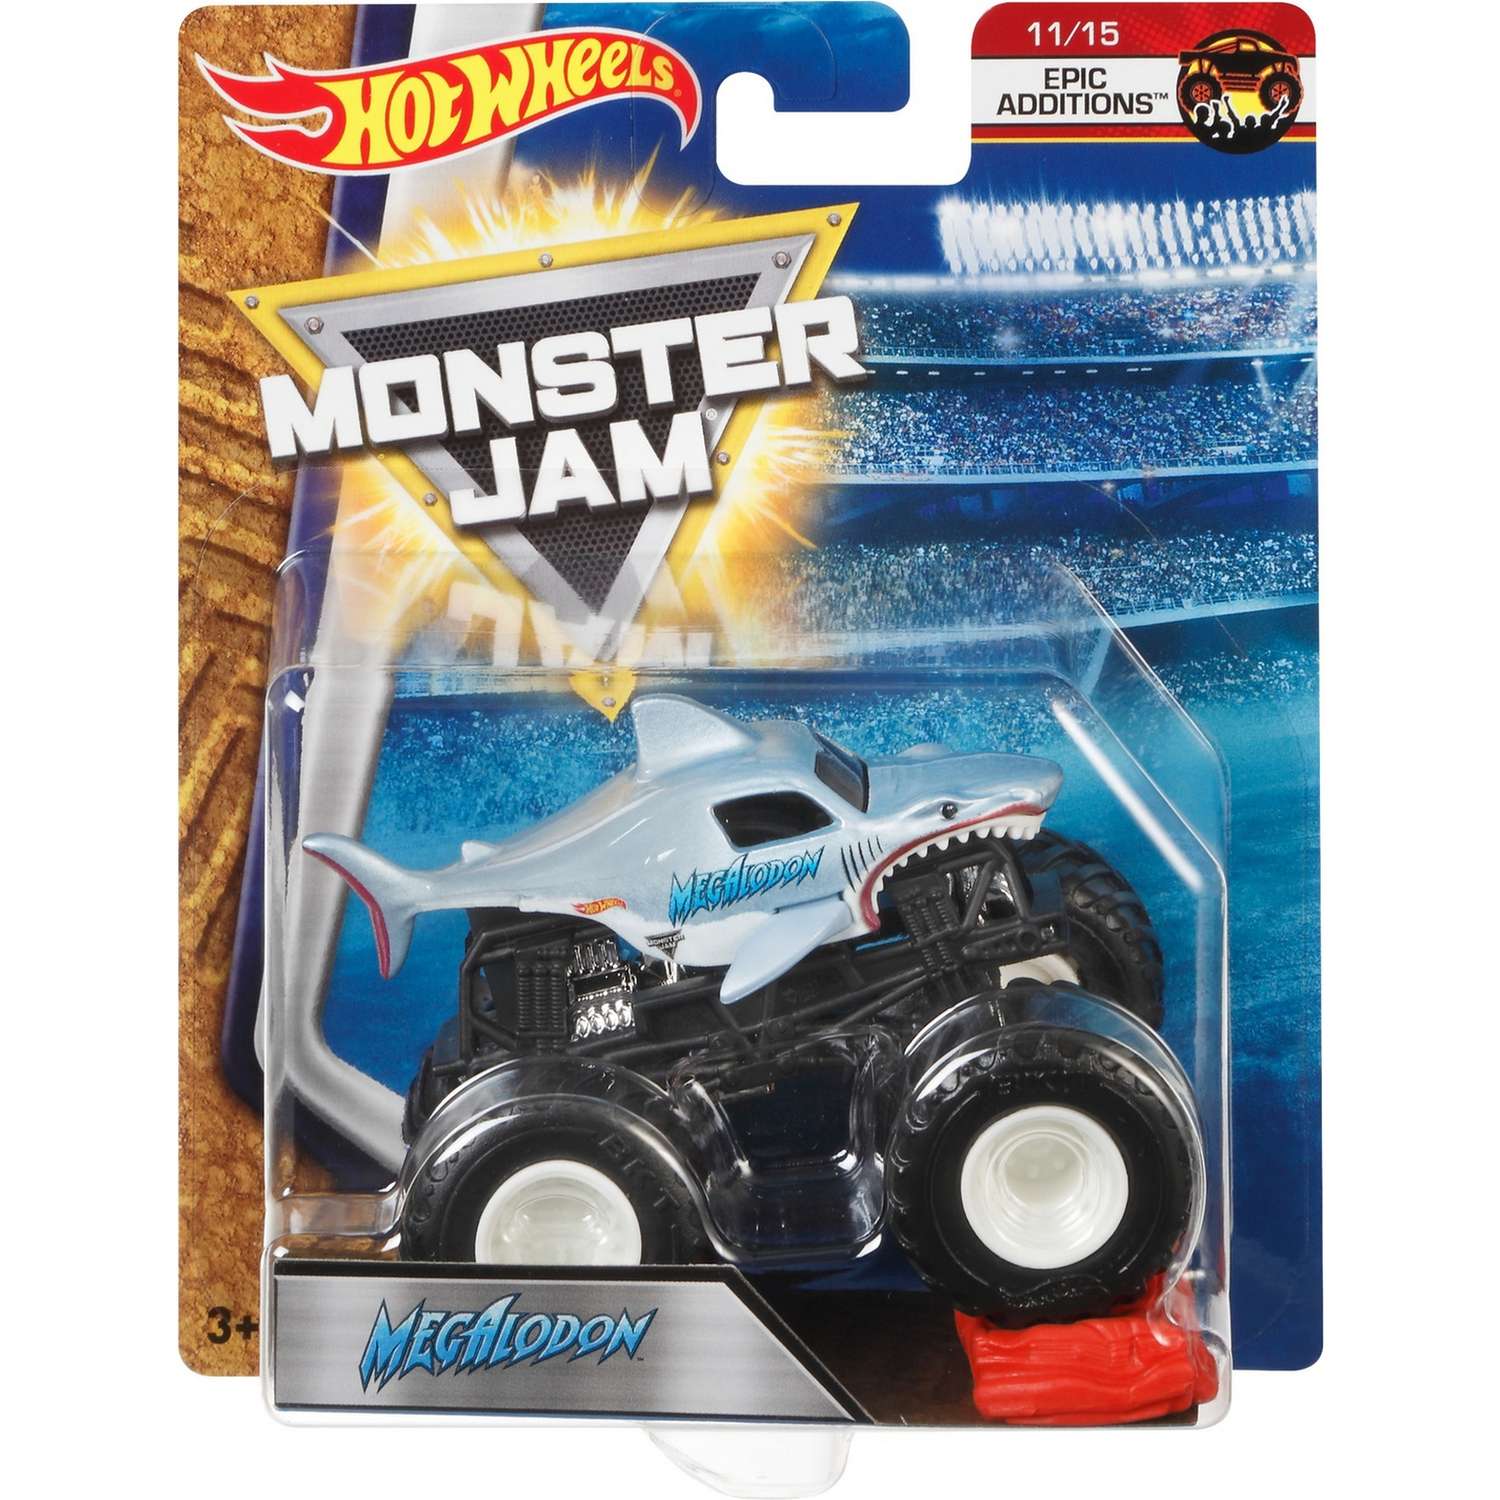 Машина Hot Wheels Monster Jam 1:64 Epic Edditions Мегалодон FLX03 21572 - фото 2